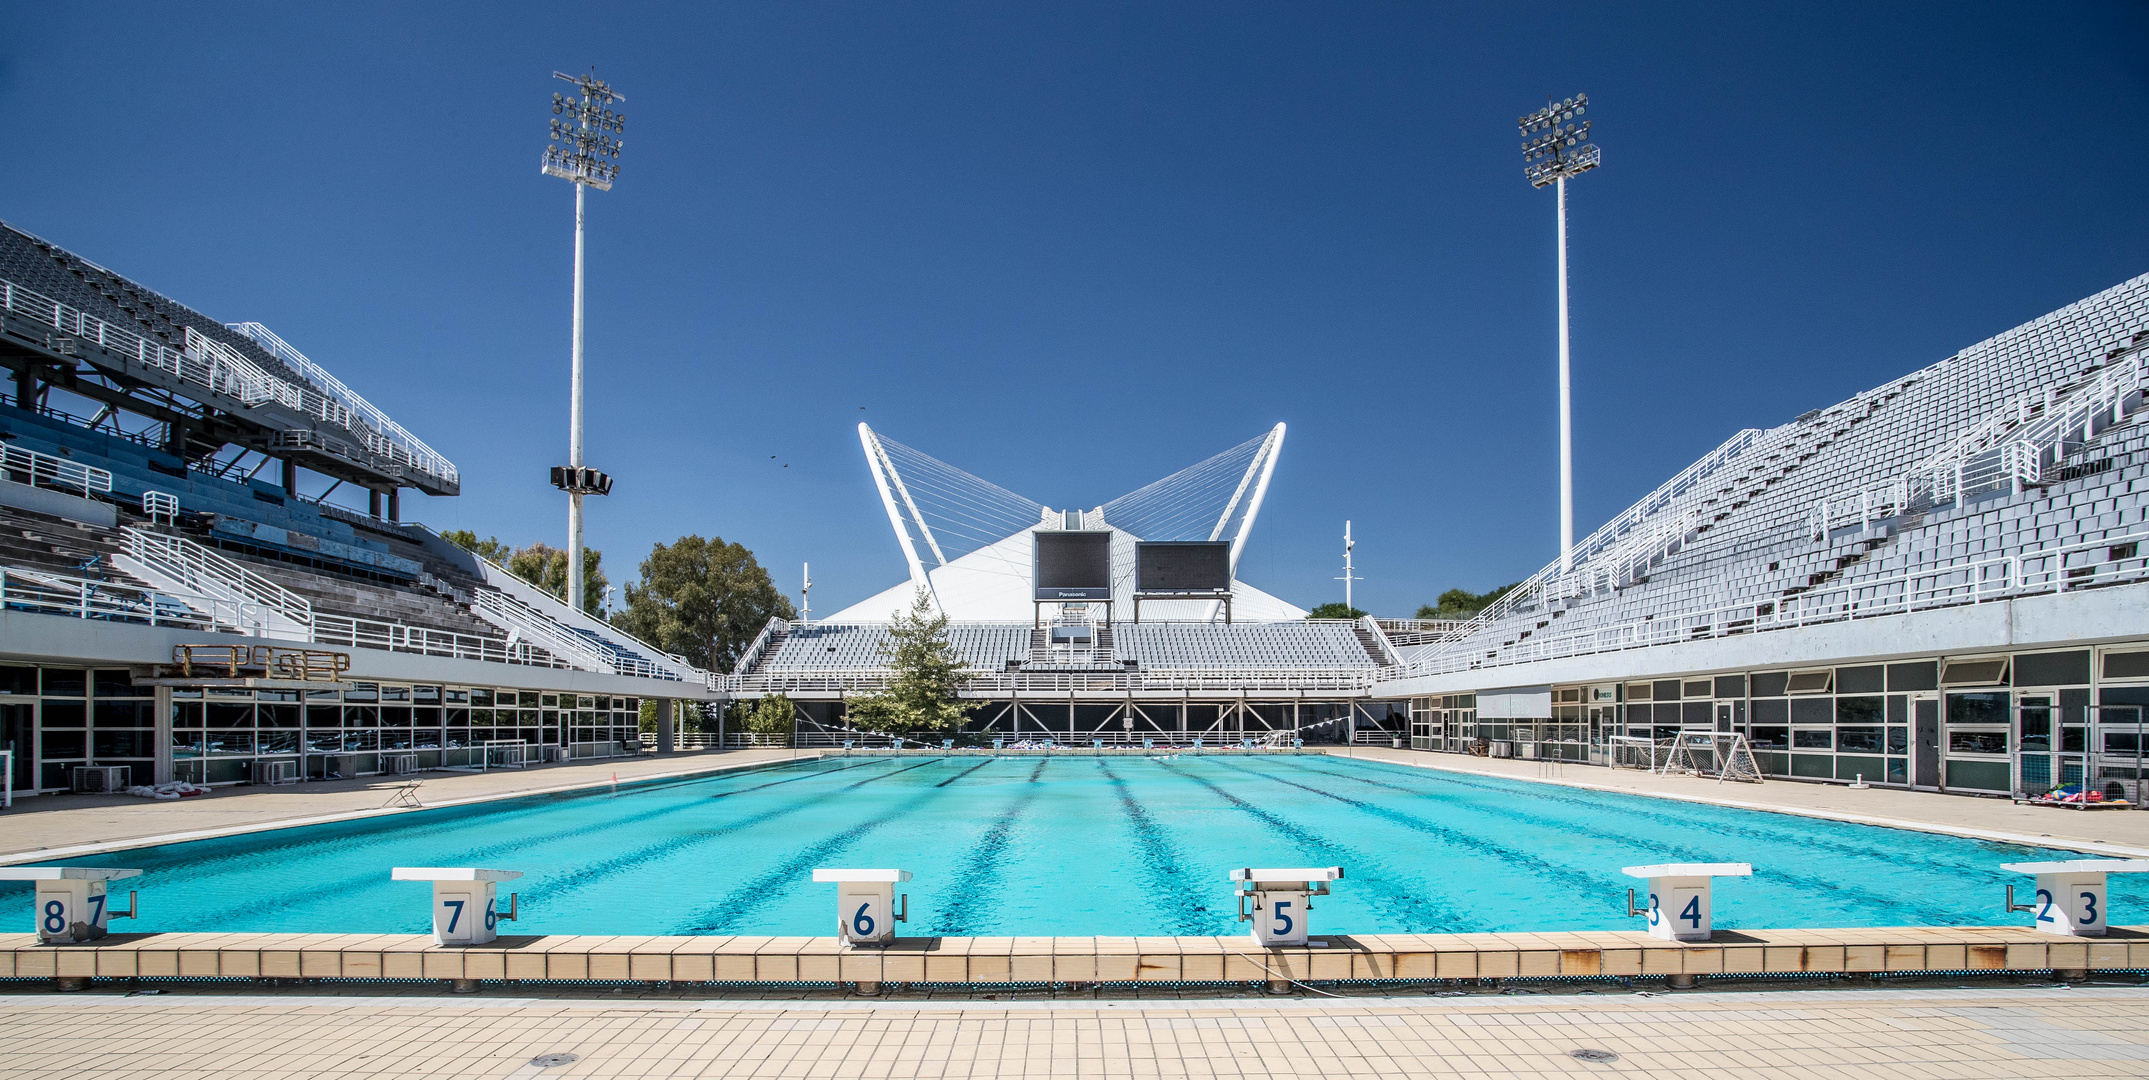 La piscine du Stade olympique d'Athènes 2004